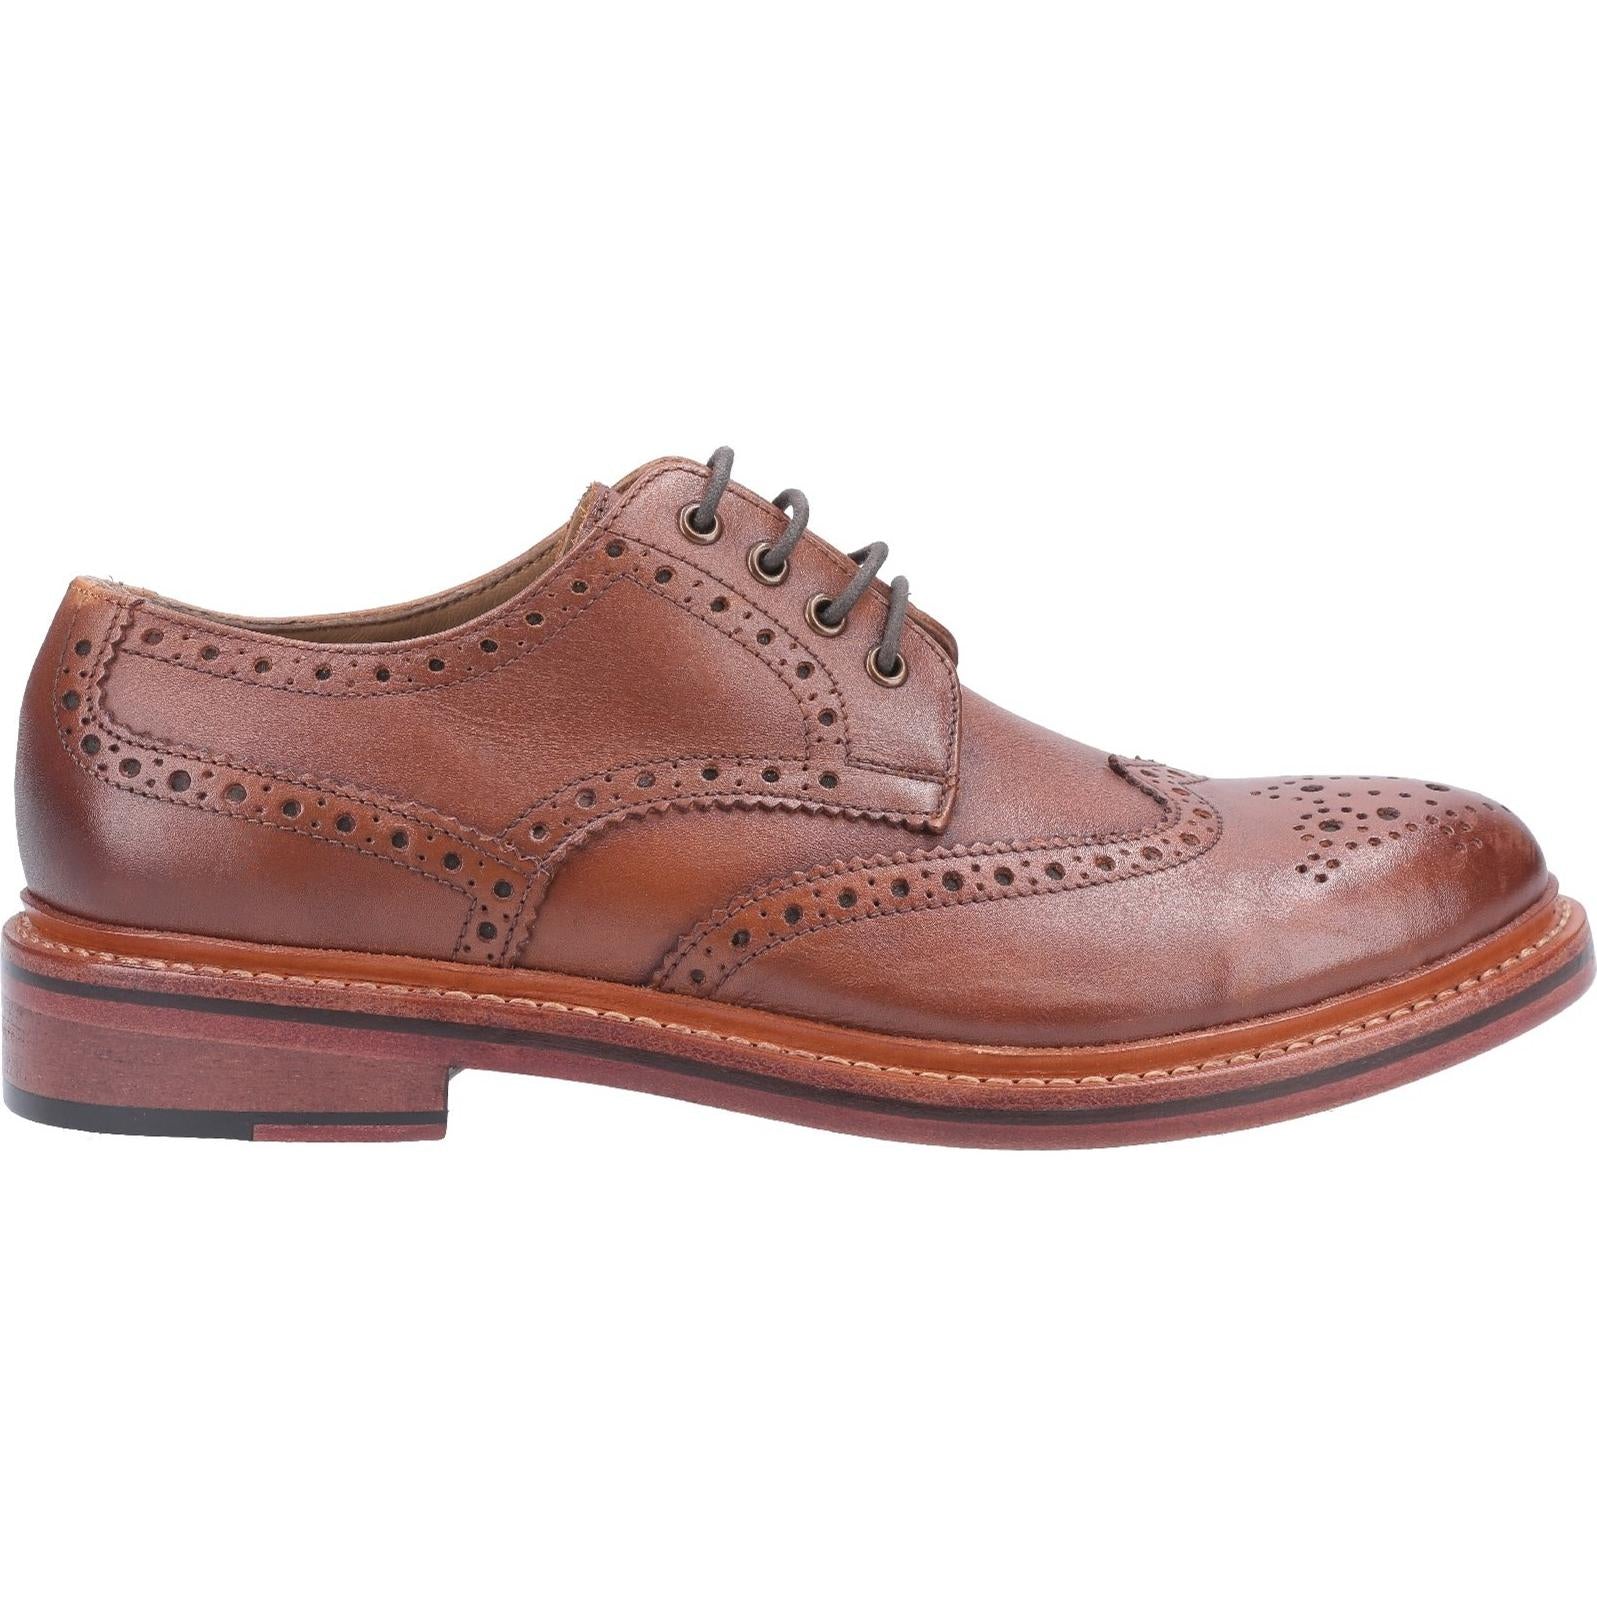 Cotswold Quenington Leather Goodyear Welt Shoe